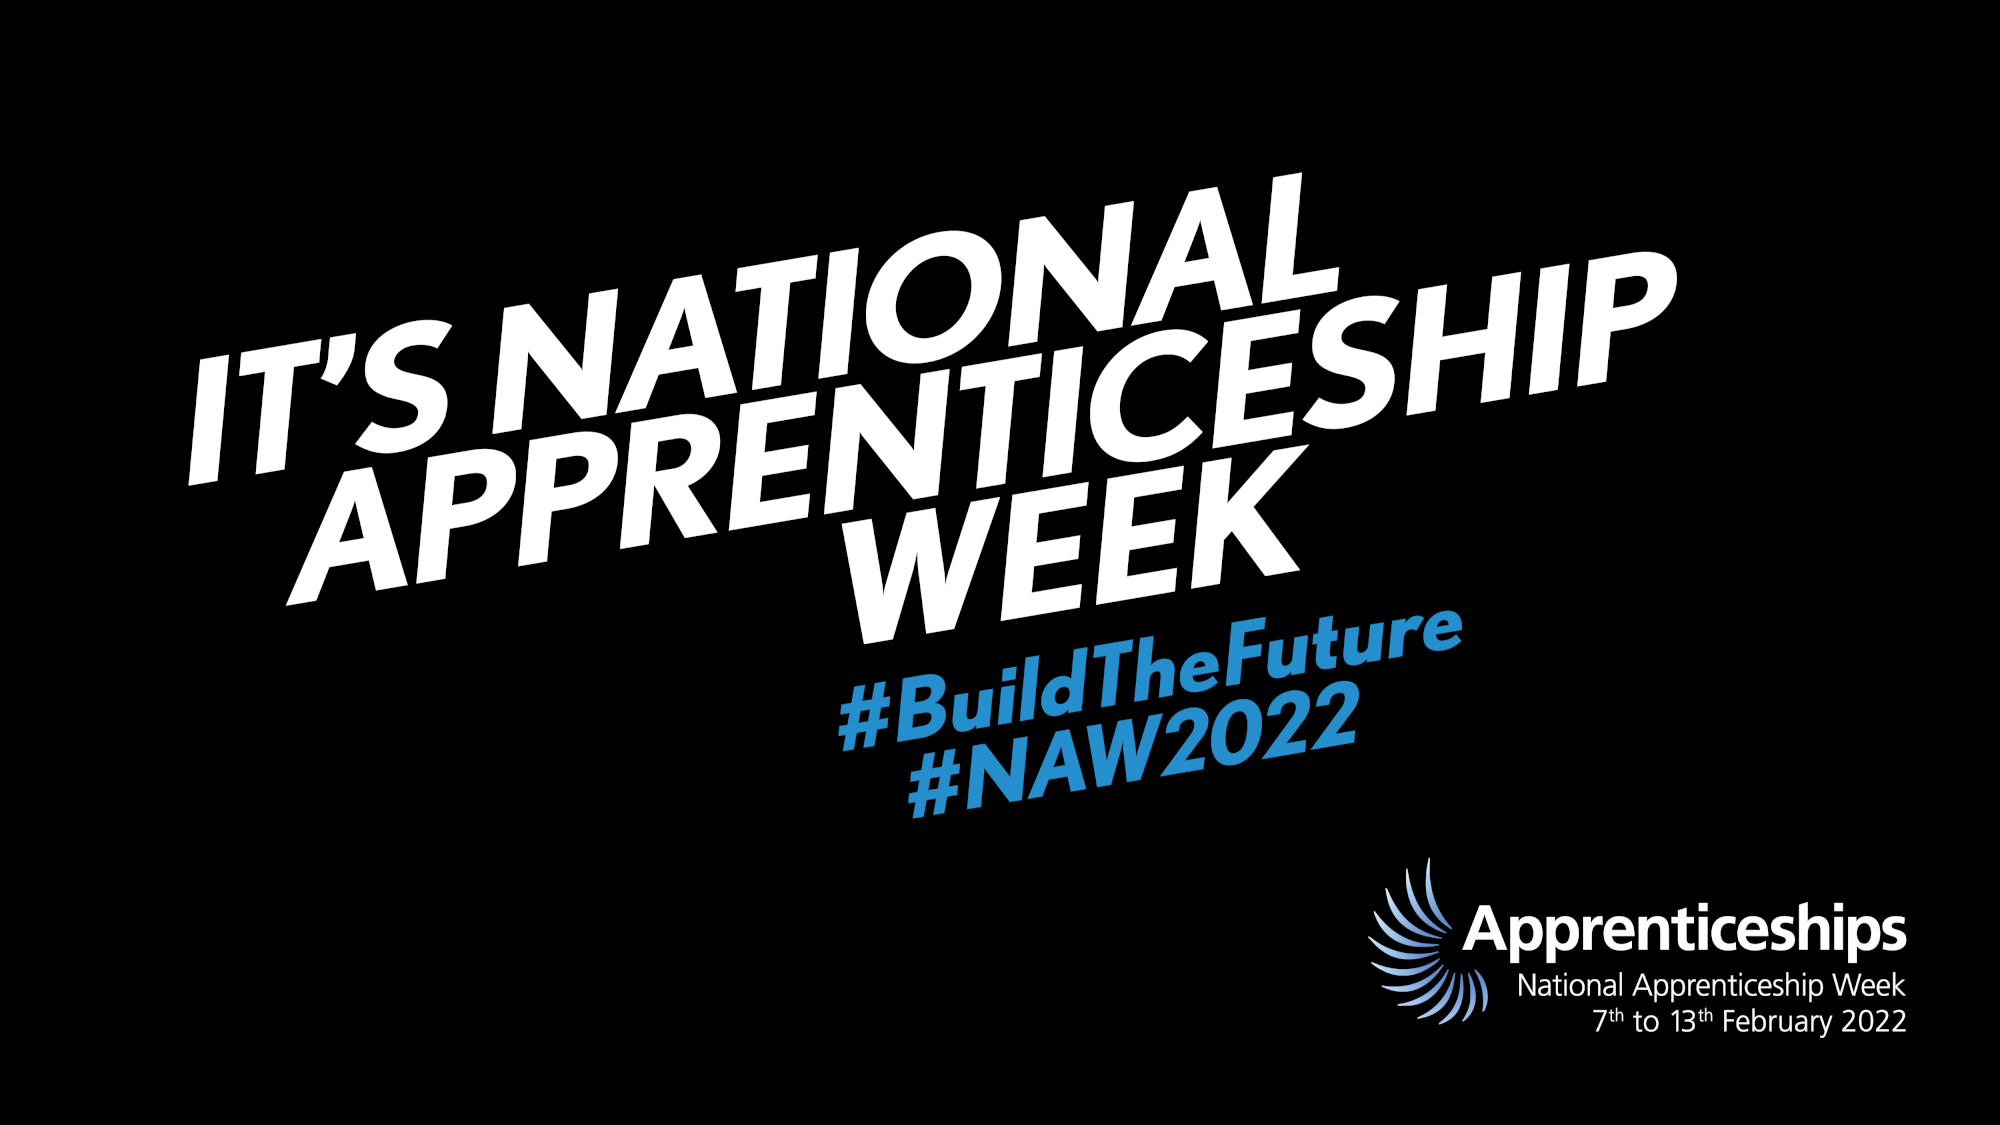 National Apprenticeship Week promotion for 2022